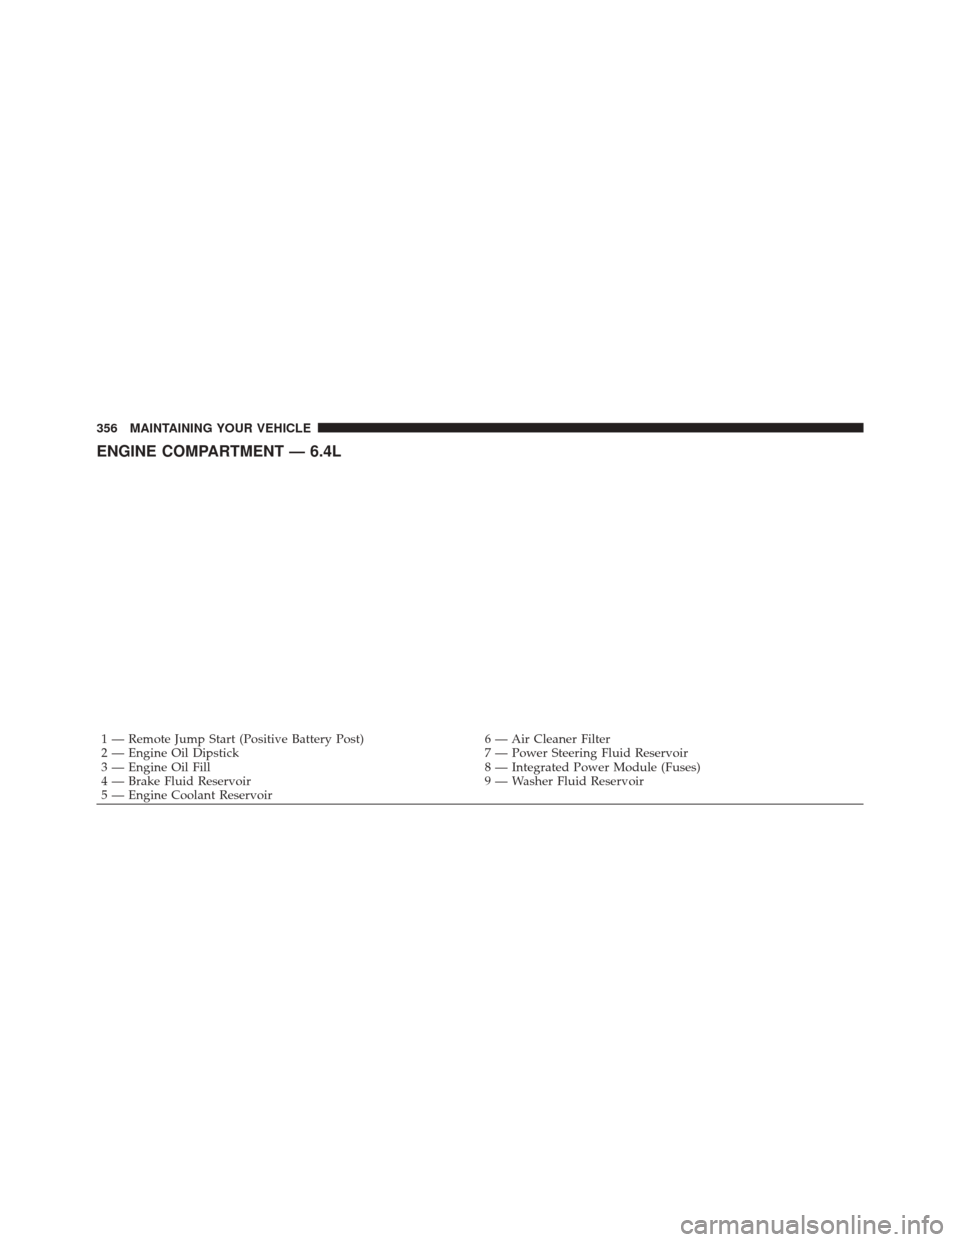 DODGE CHALLENGER SRT 2011 3.G Owners Manual ENGINE COMPARTMENT — 6.4L
1 — Remote Jump Start (Positive Battery Post)6 — Air Cleaner Filter
2 — Engine Oil Dipstick 7 — Power Steering Fluid Reservoir
3 — Engine Oil Fill 8 — Integrate